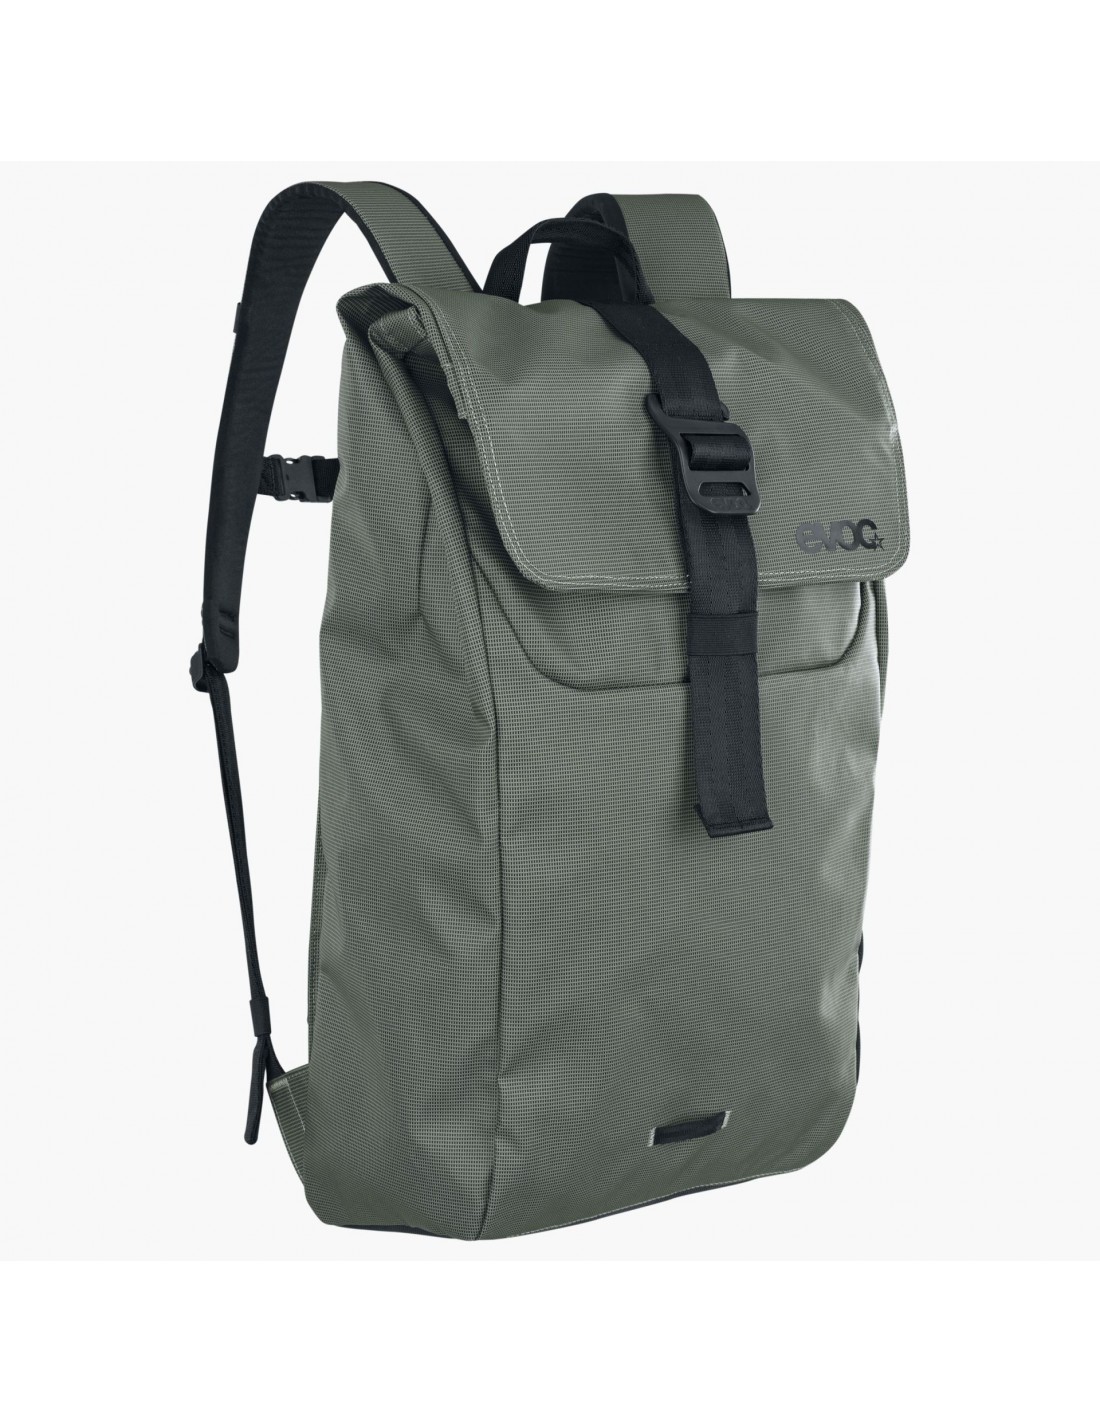 Evoc Rucksack Duffle Backpack 16, dark olive-black Rucksackart - Daypacks, Rucksackvolumen - 16 - 20 Liter, Rucksackfarbe - Grün, von Evoc